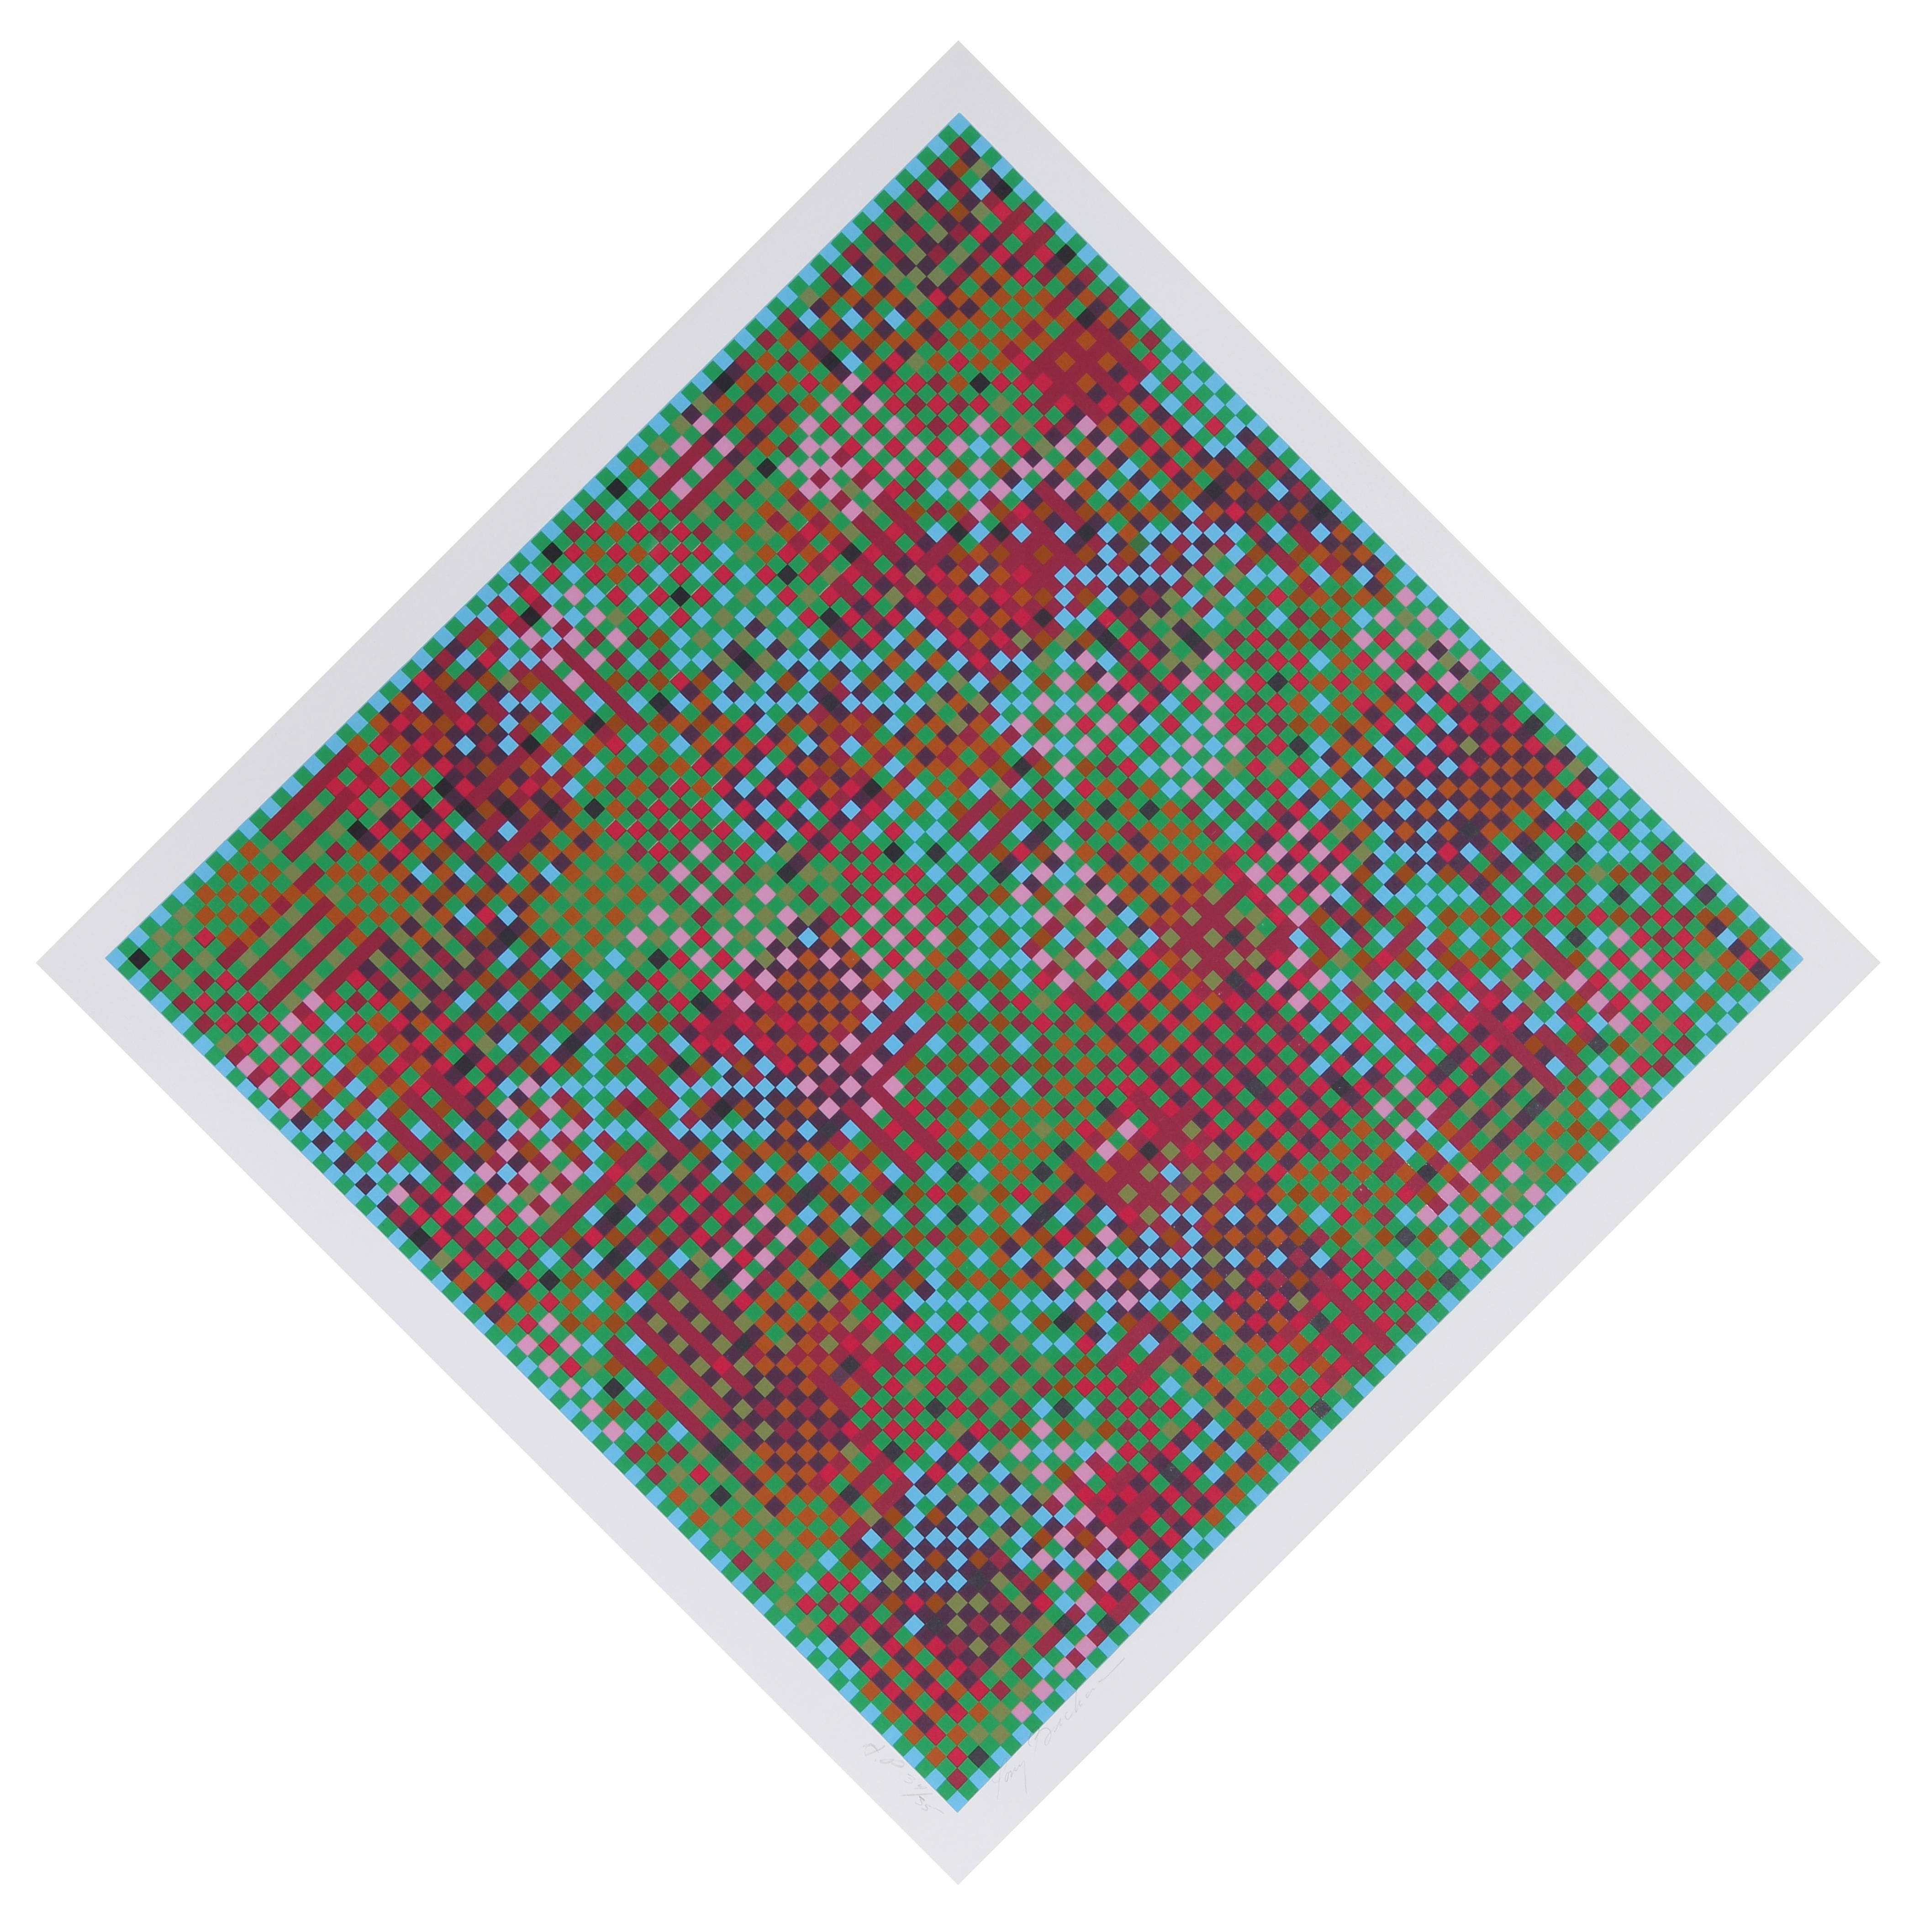 Shandaken, Geometric Abstract Silkscreen by Tony Bechara